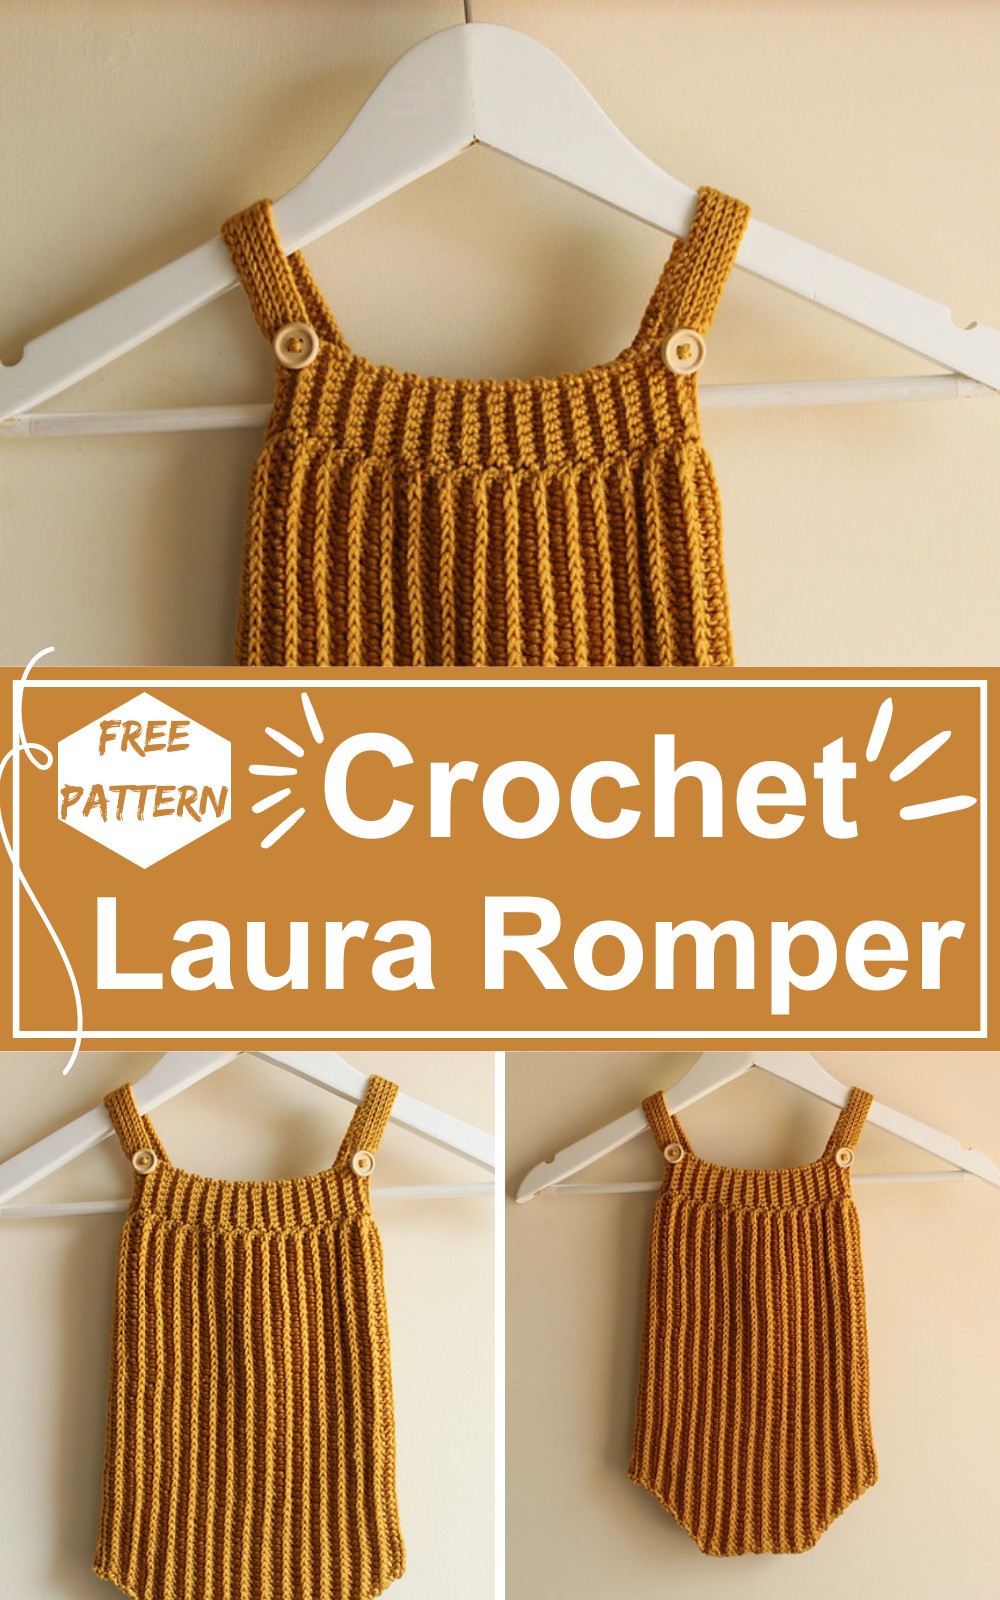 Crochet Laura Romper